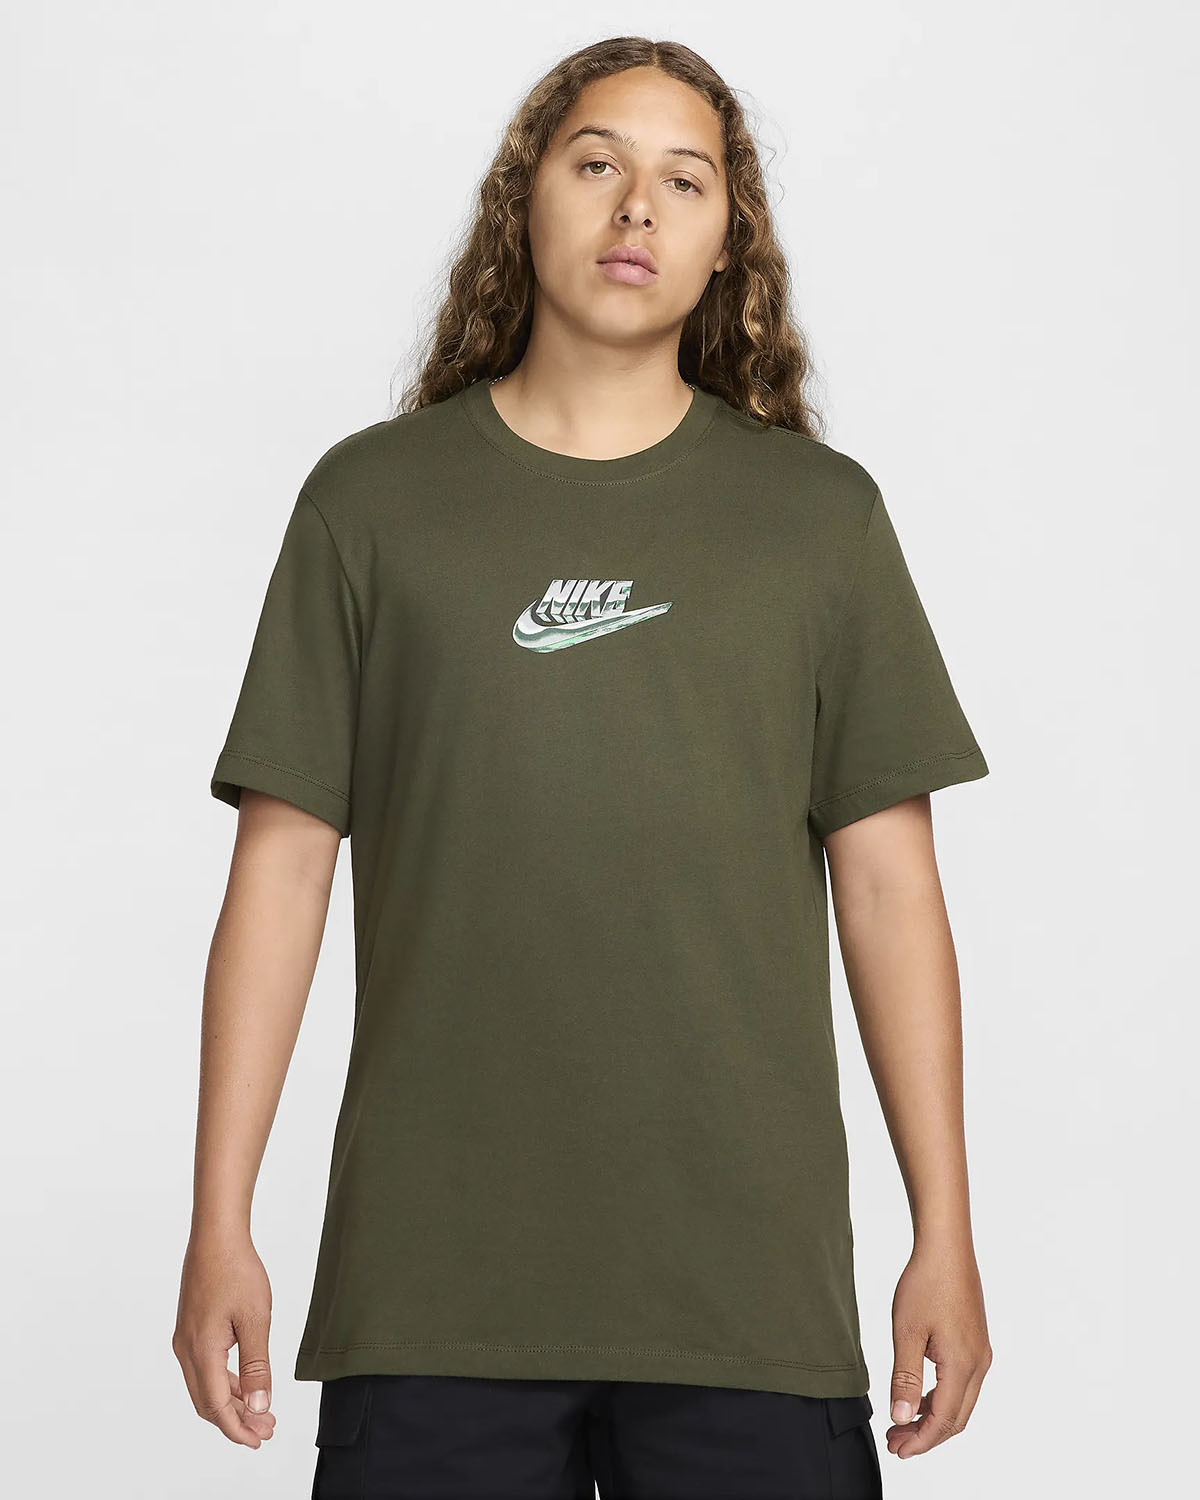 Nike Sportswear T Shirt Cargo Khaki